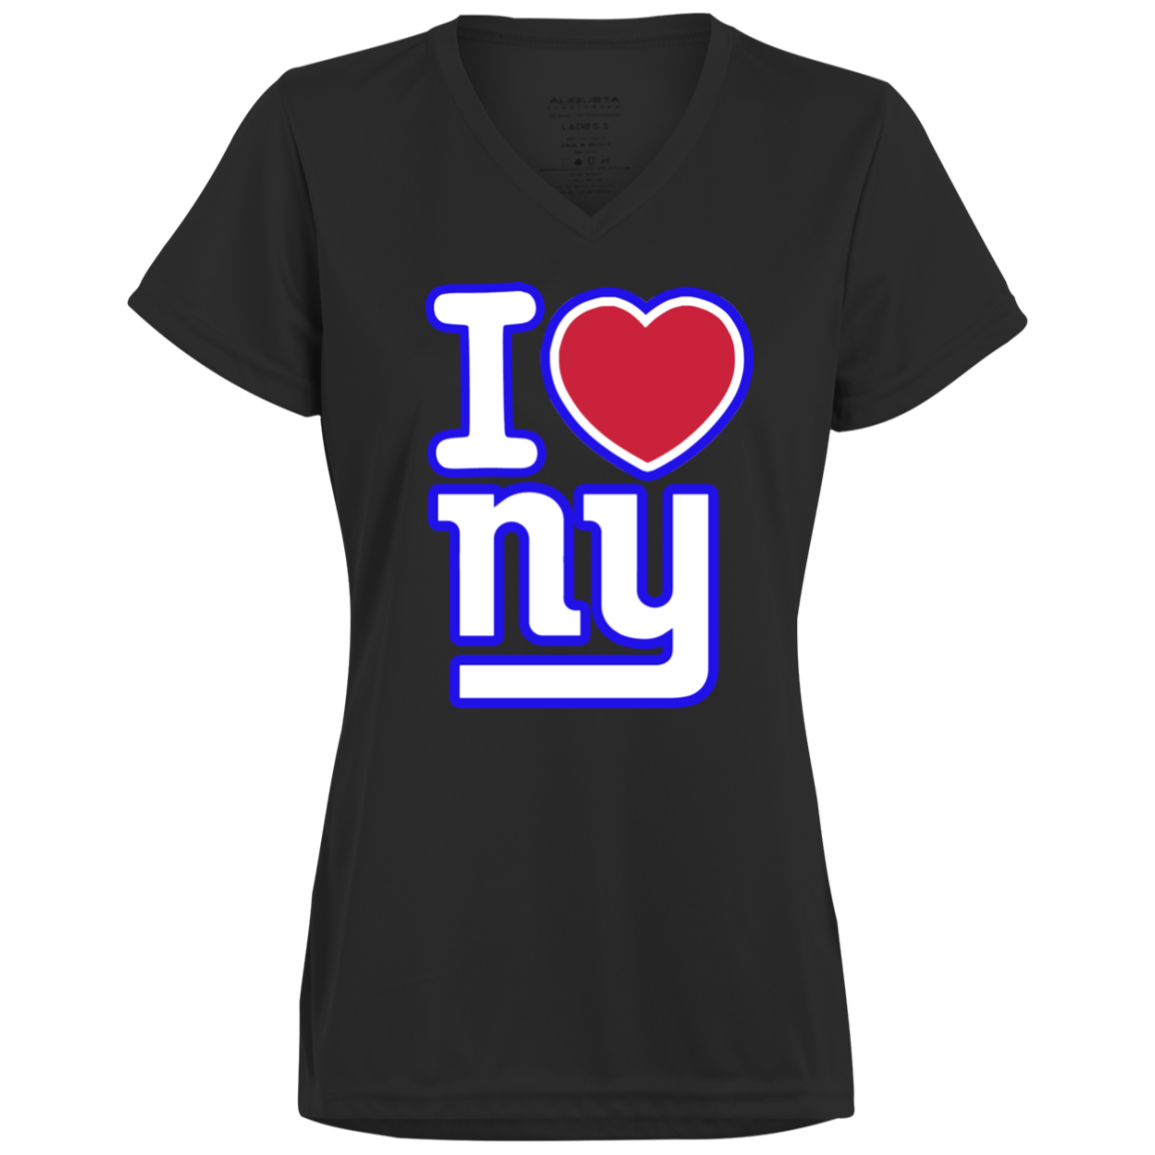 ArtichokeUSA Custom Design. I heart New York Giants. NY Giants Football Fan Art. Ladies’ Moisture-Wicking V-Neck Tee